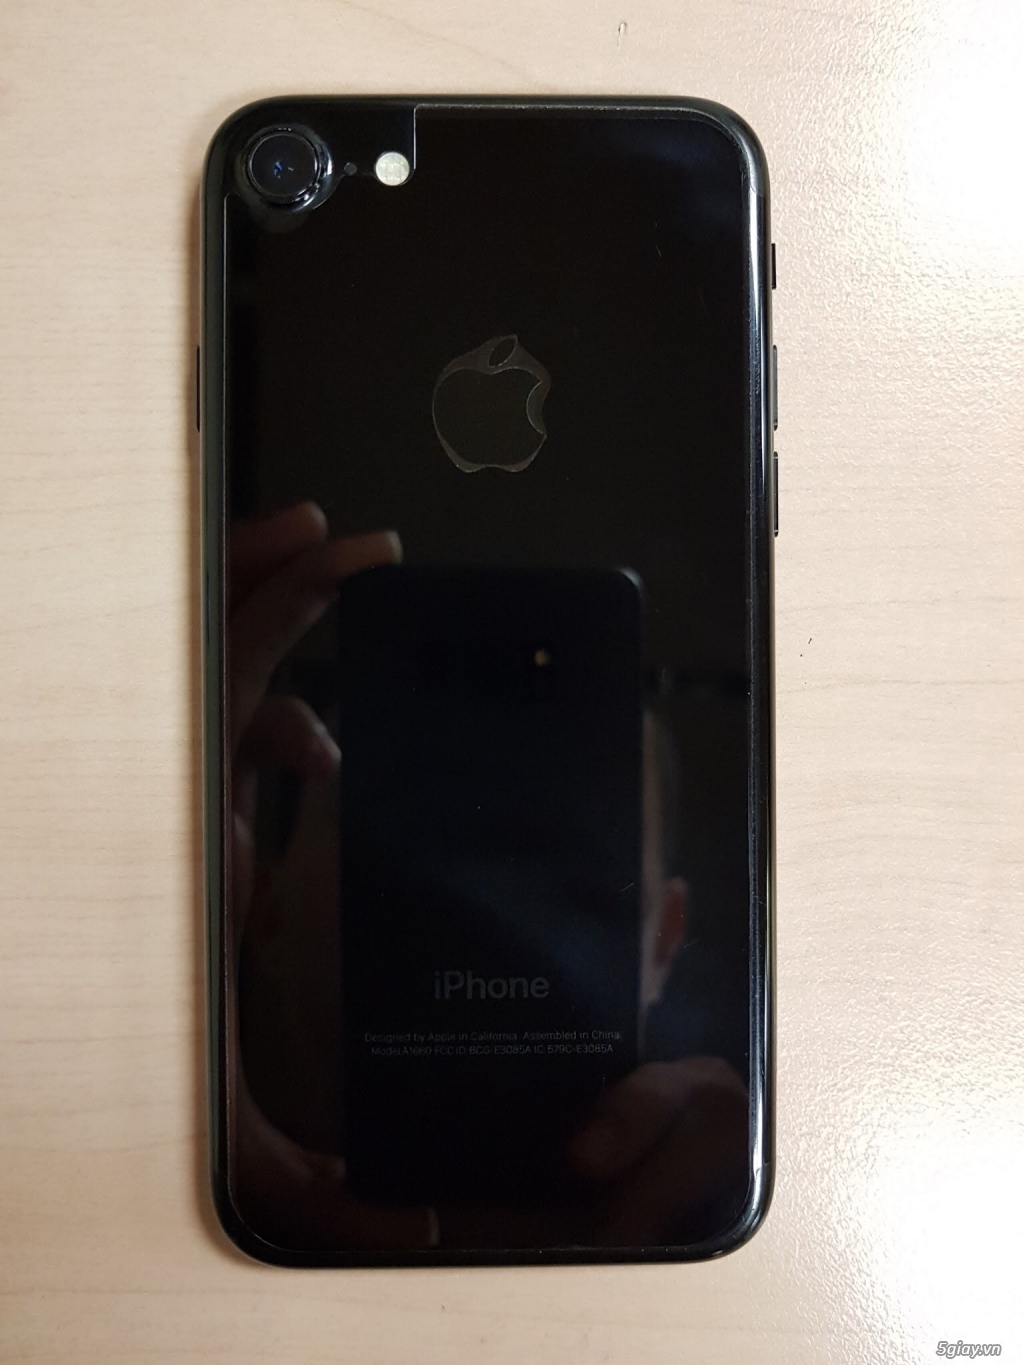 iPhone 7 jetblack 128Gb-BH apple 11-2017